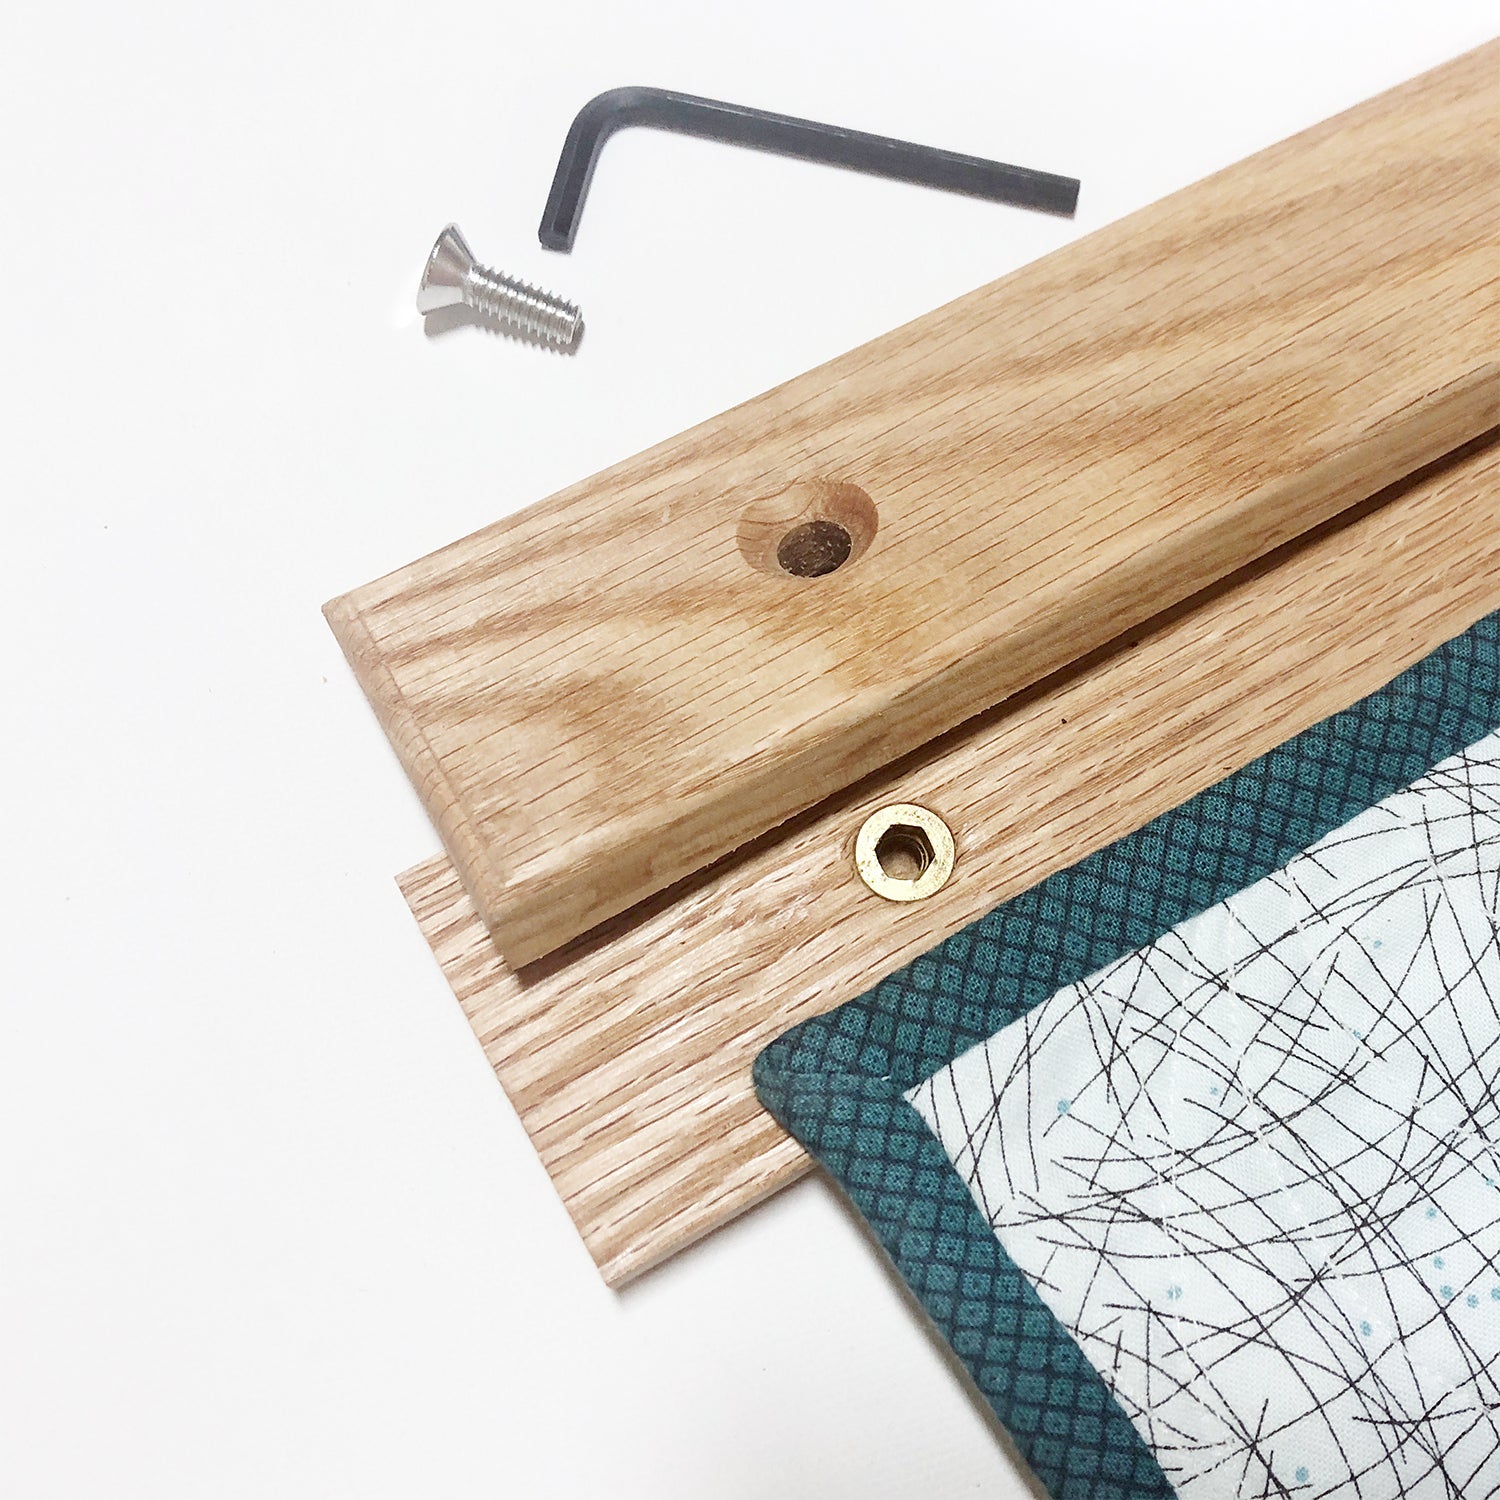 Wooden Quilt Hanger Frame (no more quilt sleeves for dowels) – Quilt Hangers